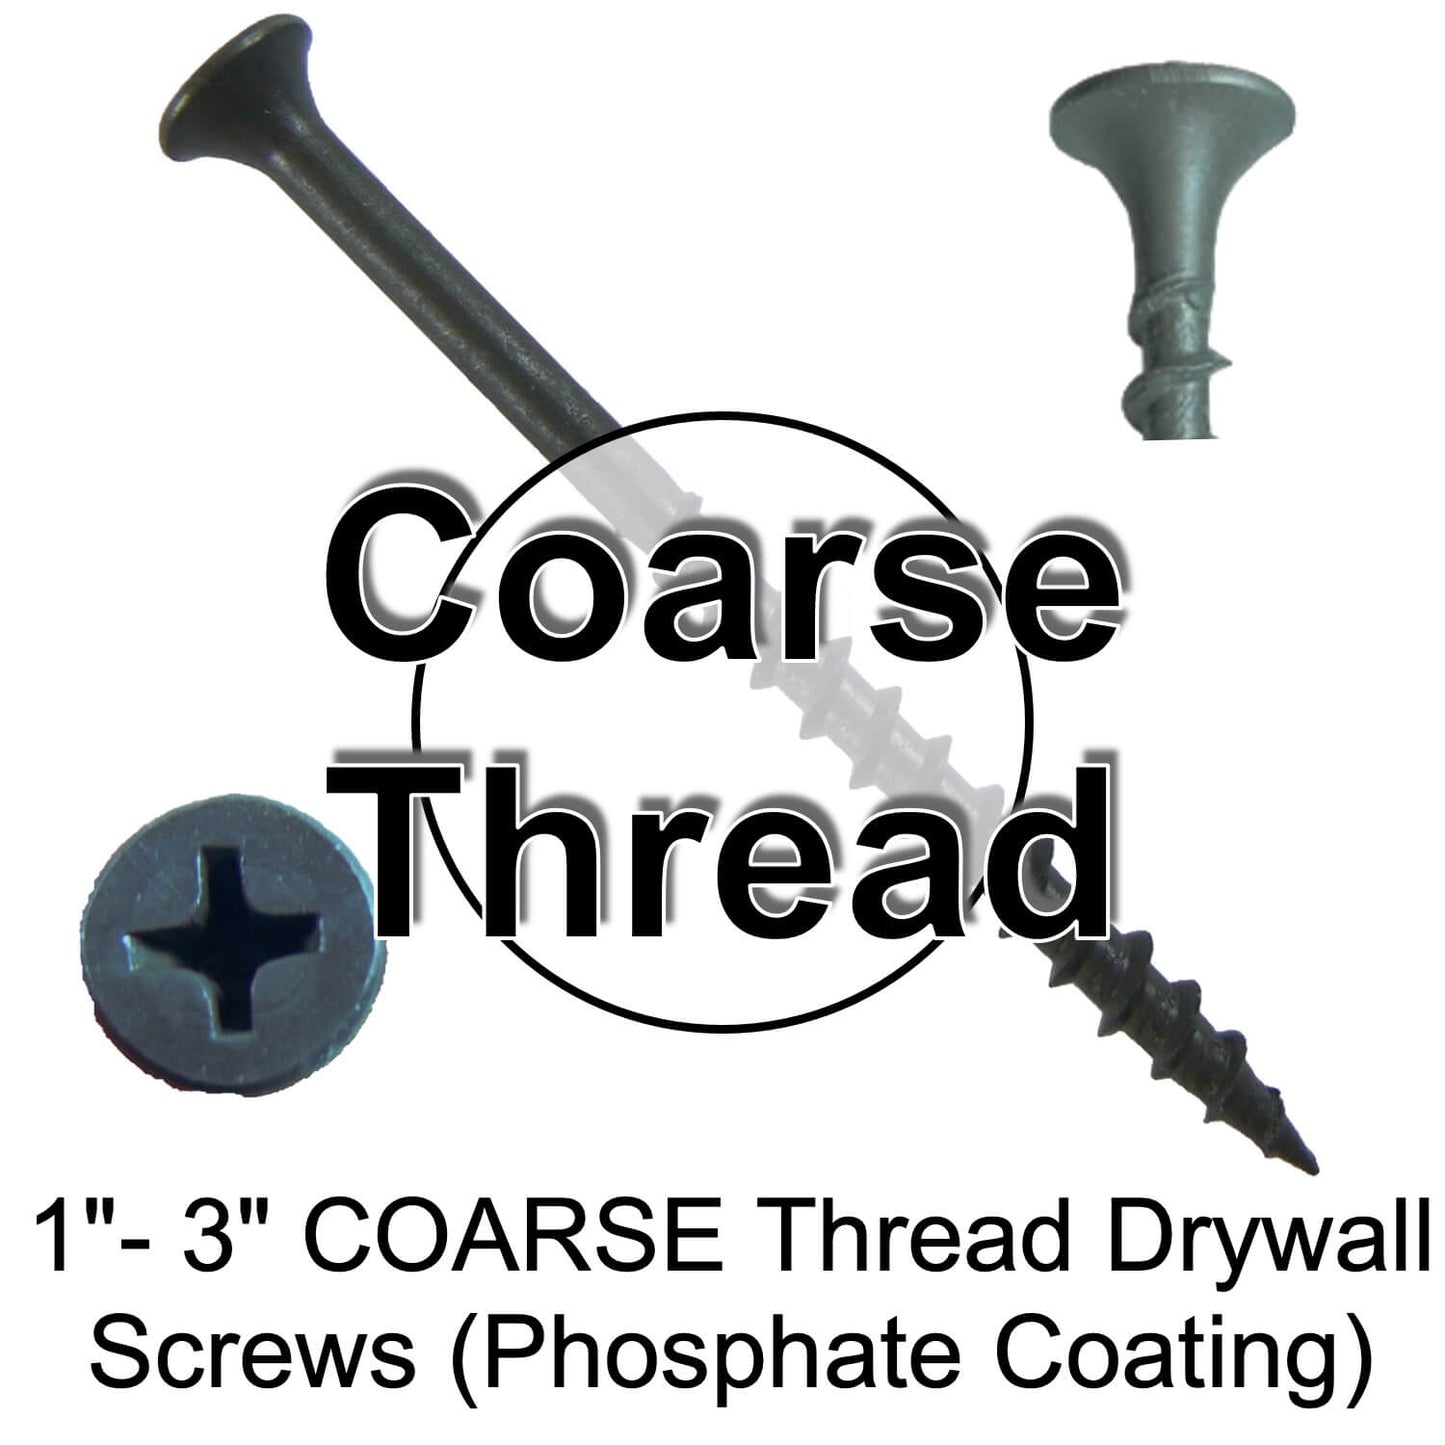 Gray Phosphate Coarse Thread Drywall Screws - Drywall, Gypsum board, Sheetrock, Plasterboard Screws. Use for all purpose wood screws.